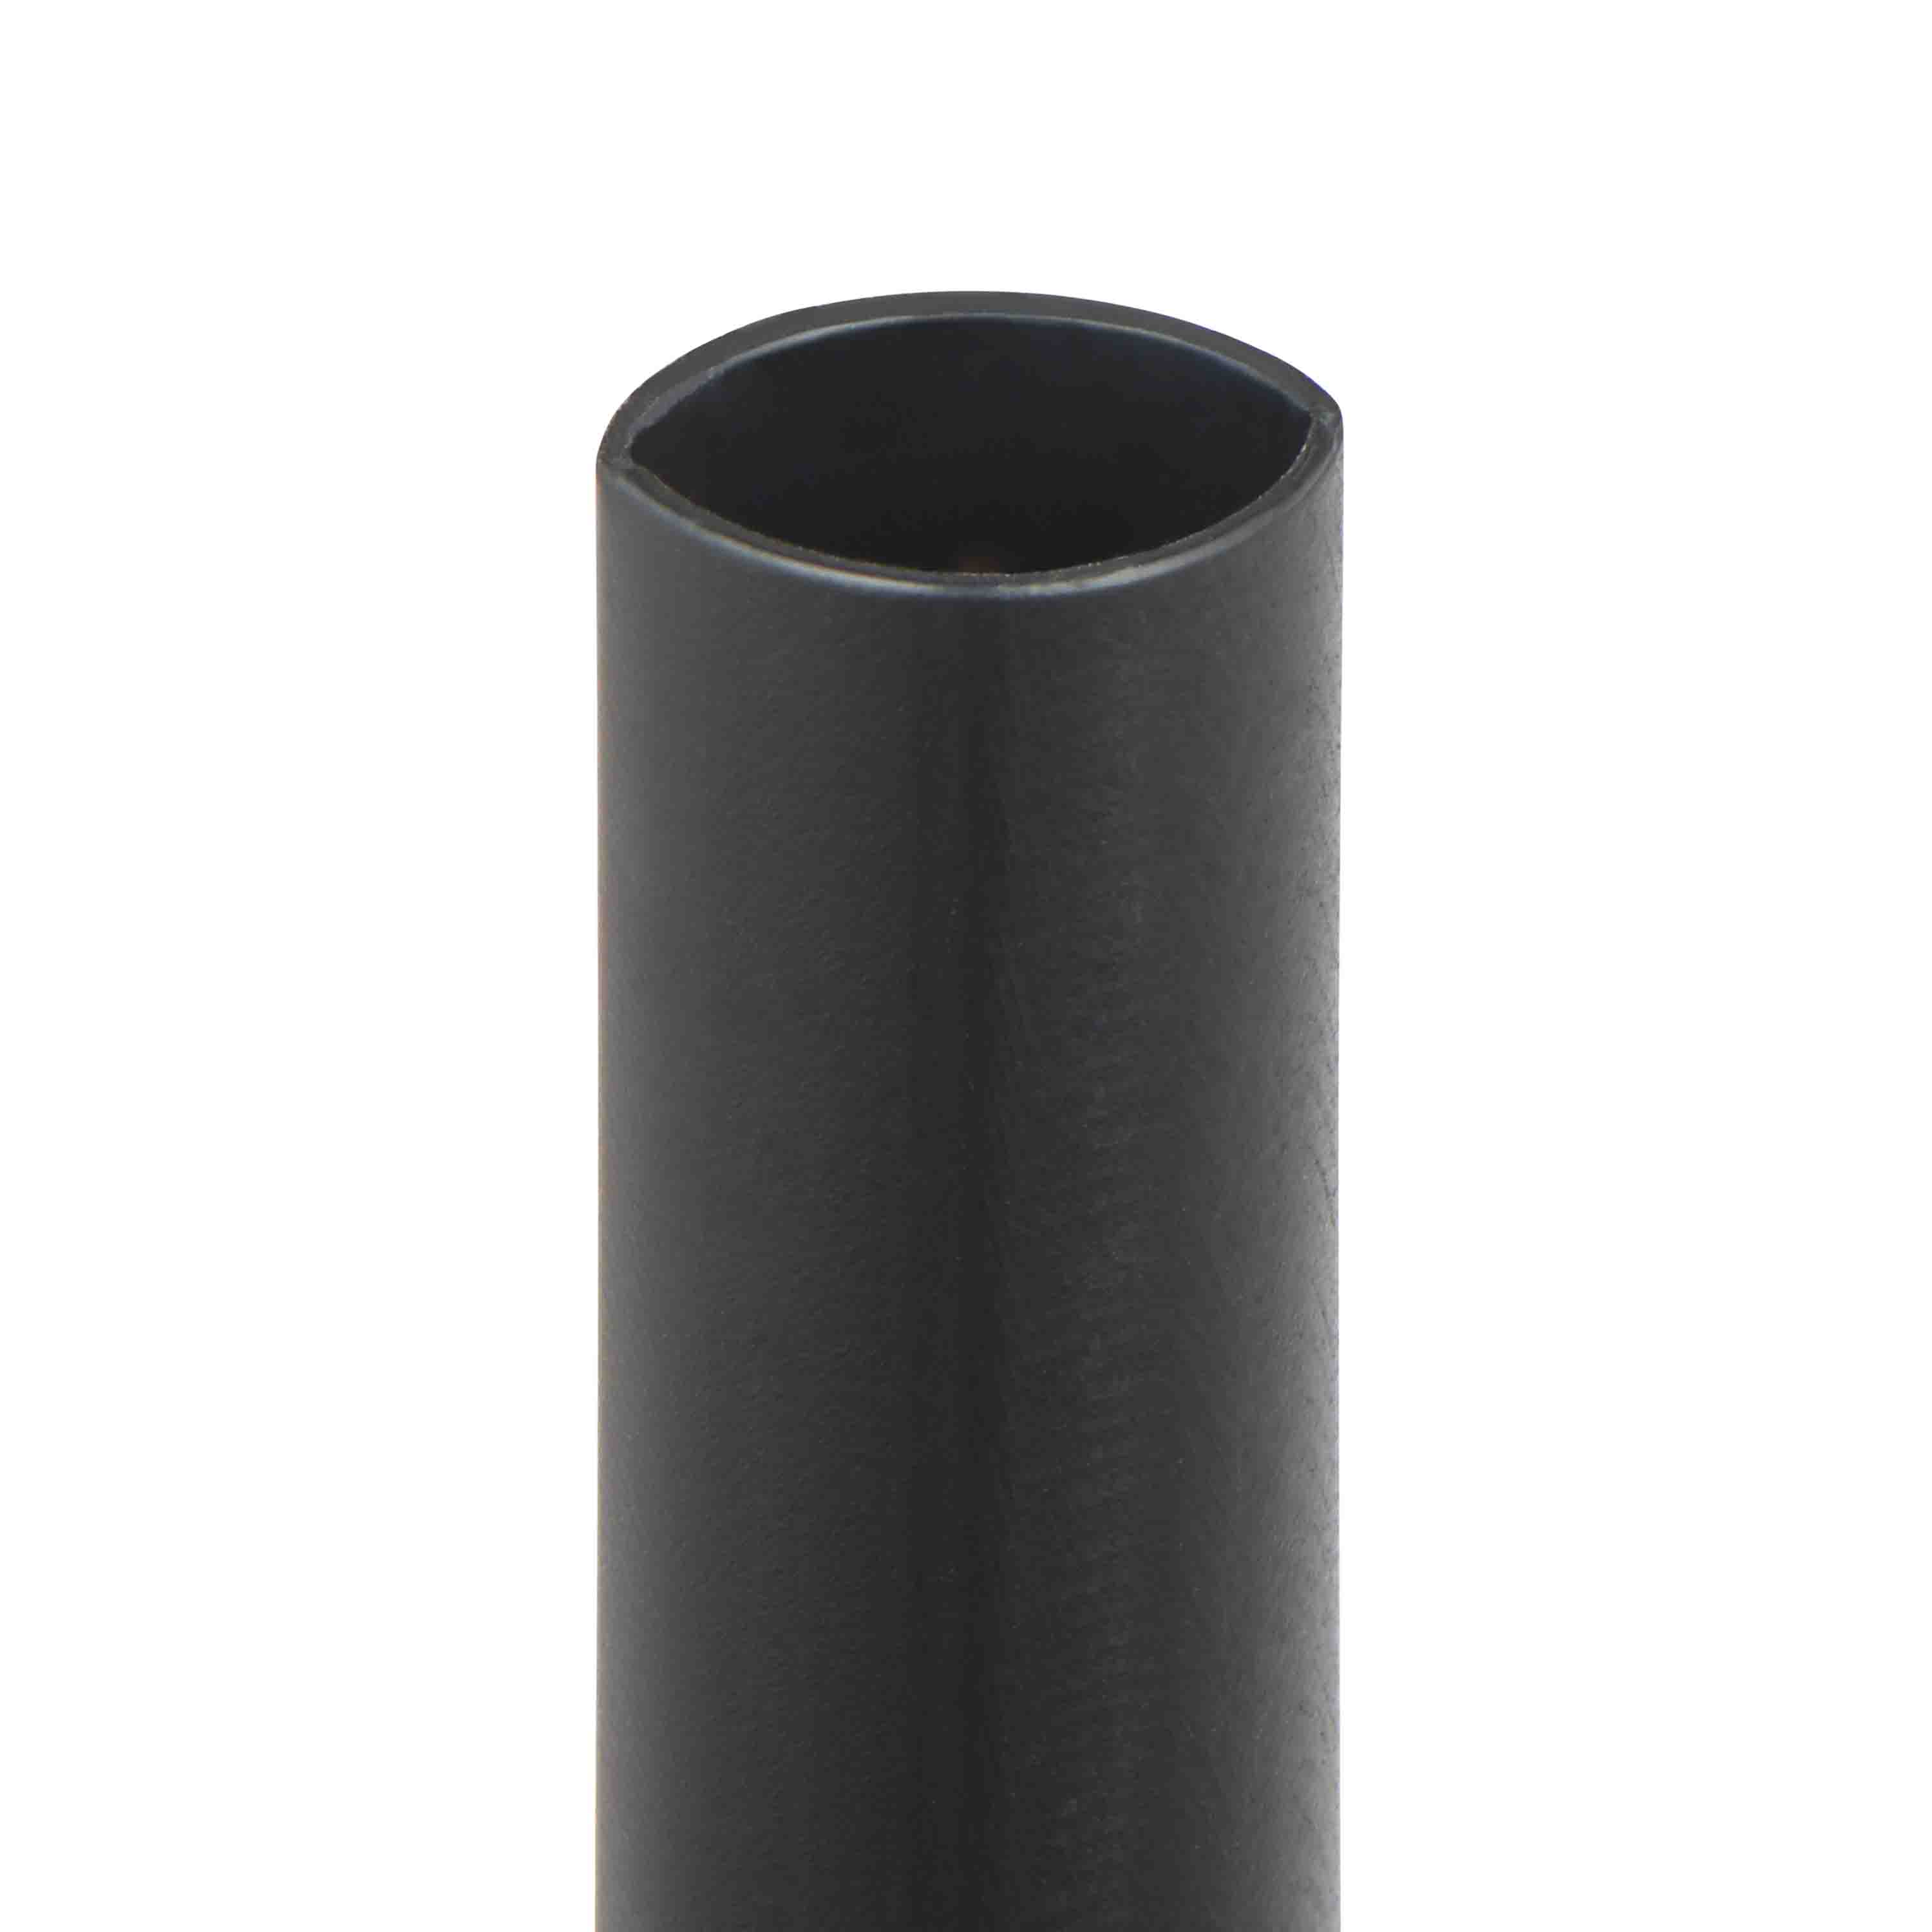 Tubo termorretráctil 3M de Poliolefina Negro, contracción 4.5:1, Ø 12mm, long. 1m, forrado con adhesivo